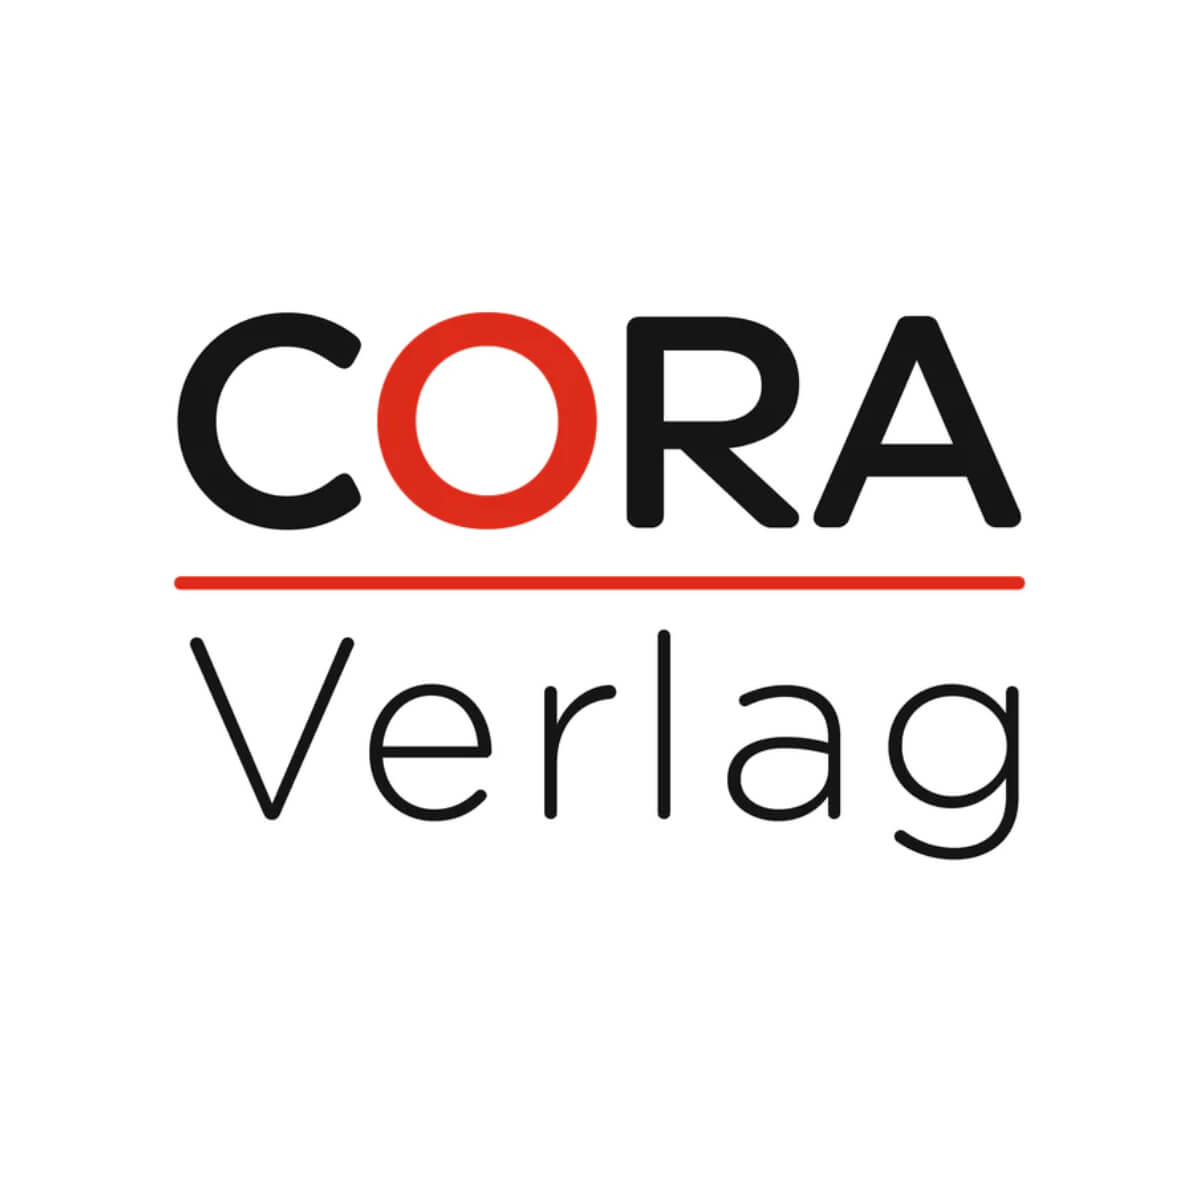 CORA Verlag | Bookspread